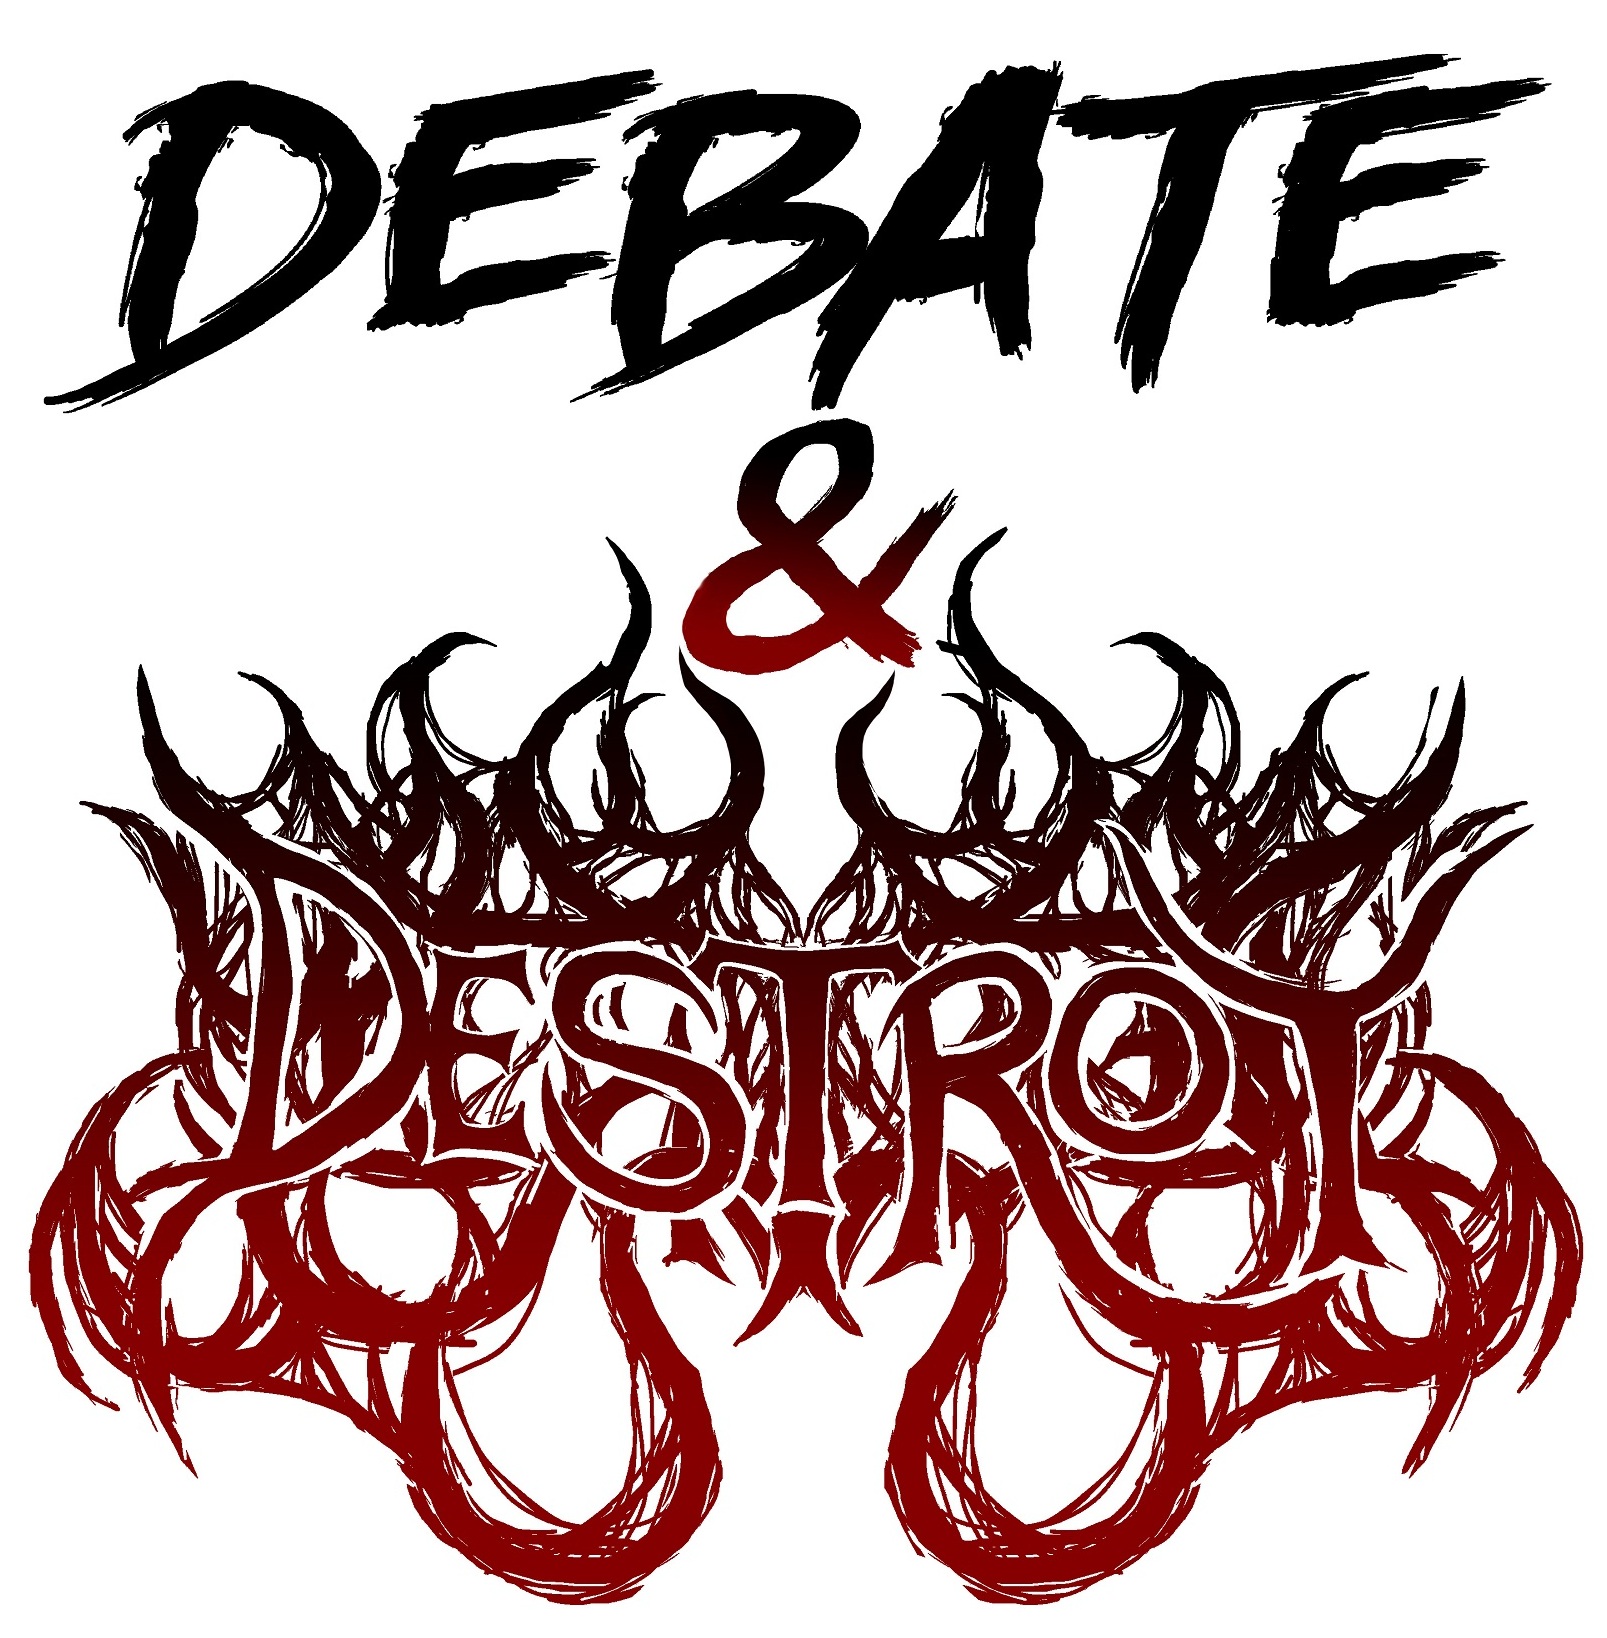 Debate &amp; Destroy